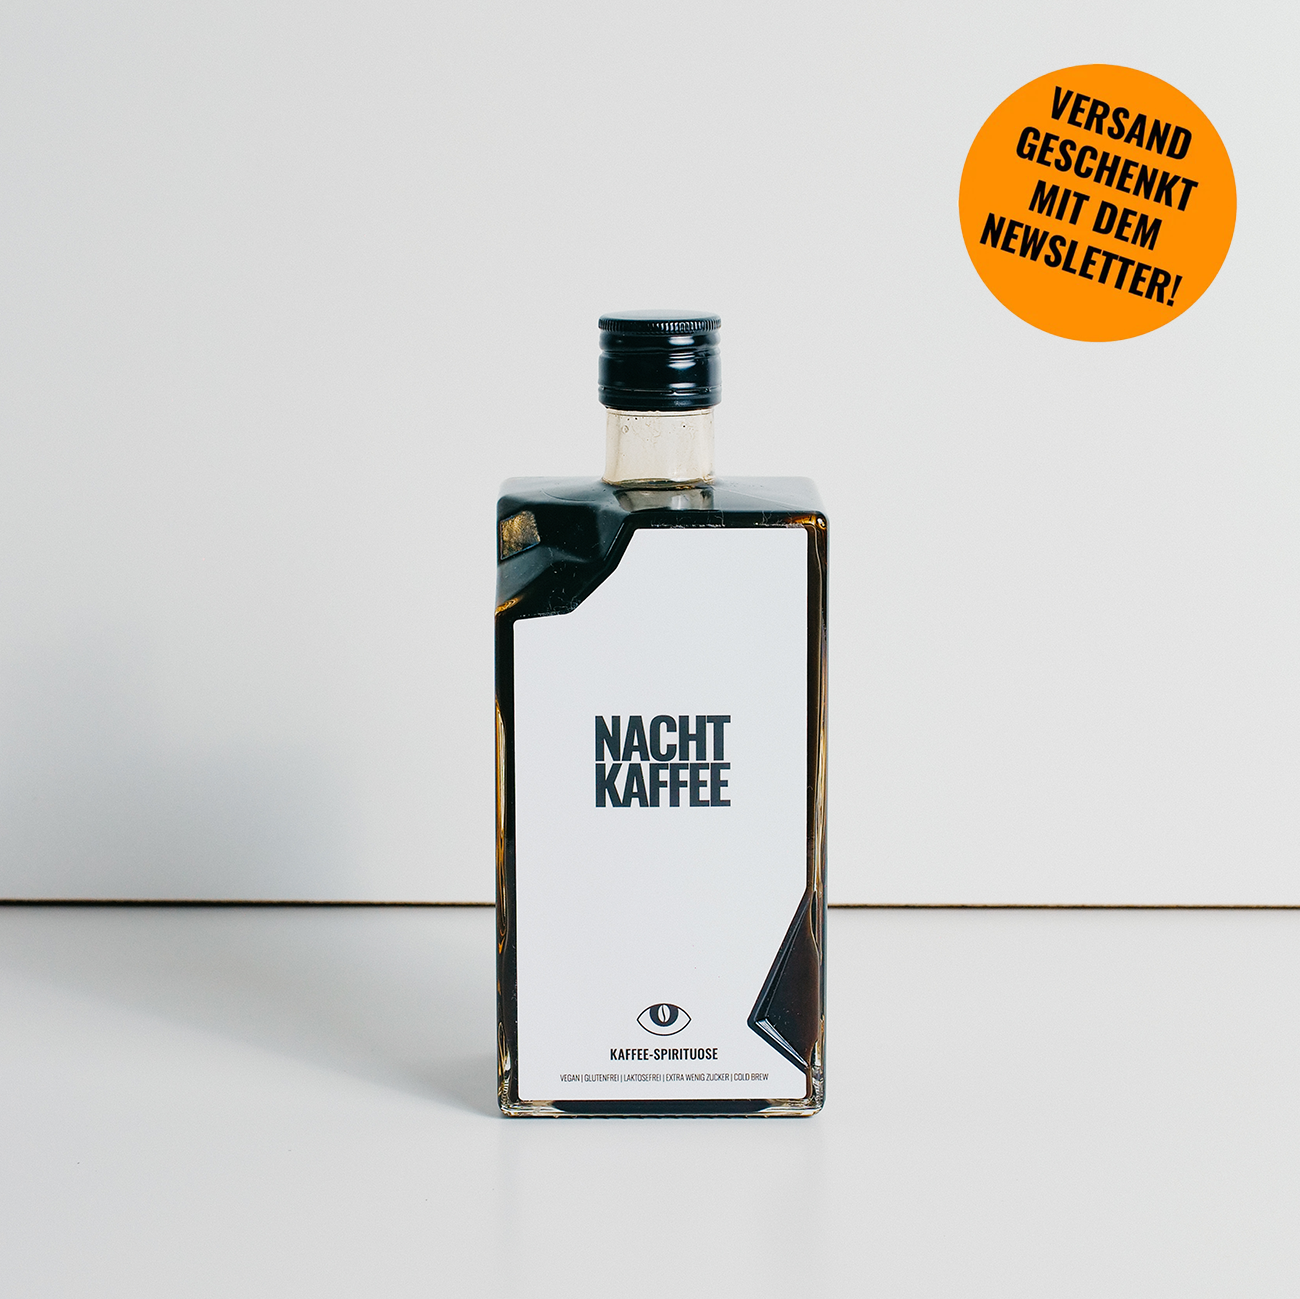 NACHTKAFFEE, Kaffee-Spirituose (Liquid Cocaine), 700ml